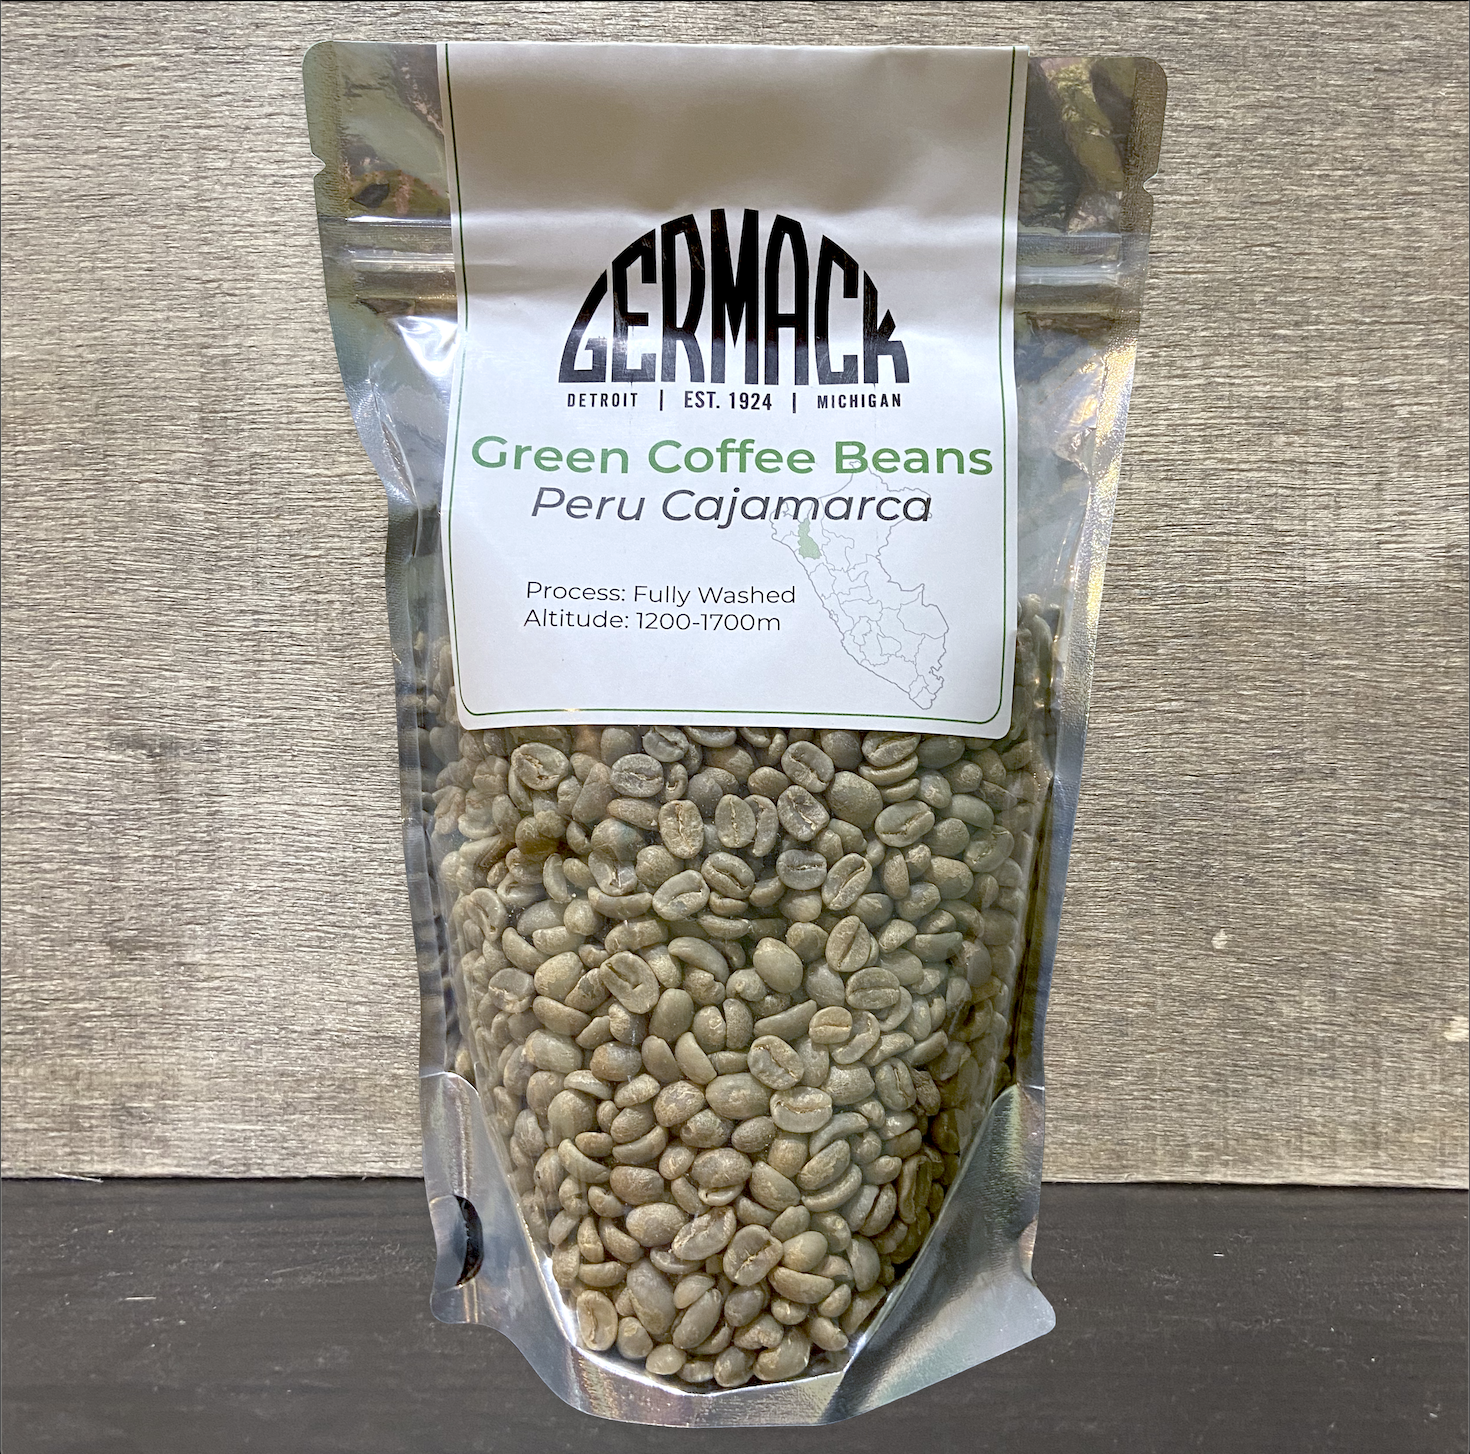 Picture Germack Green Coffee Beans (1 lb) - Peru Cajamarca